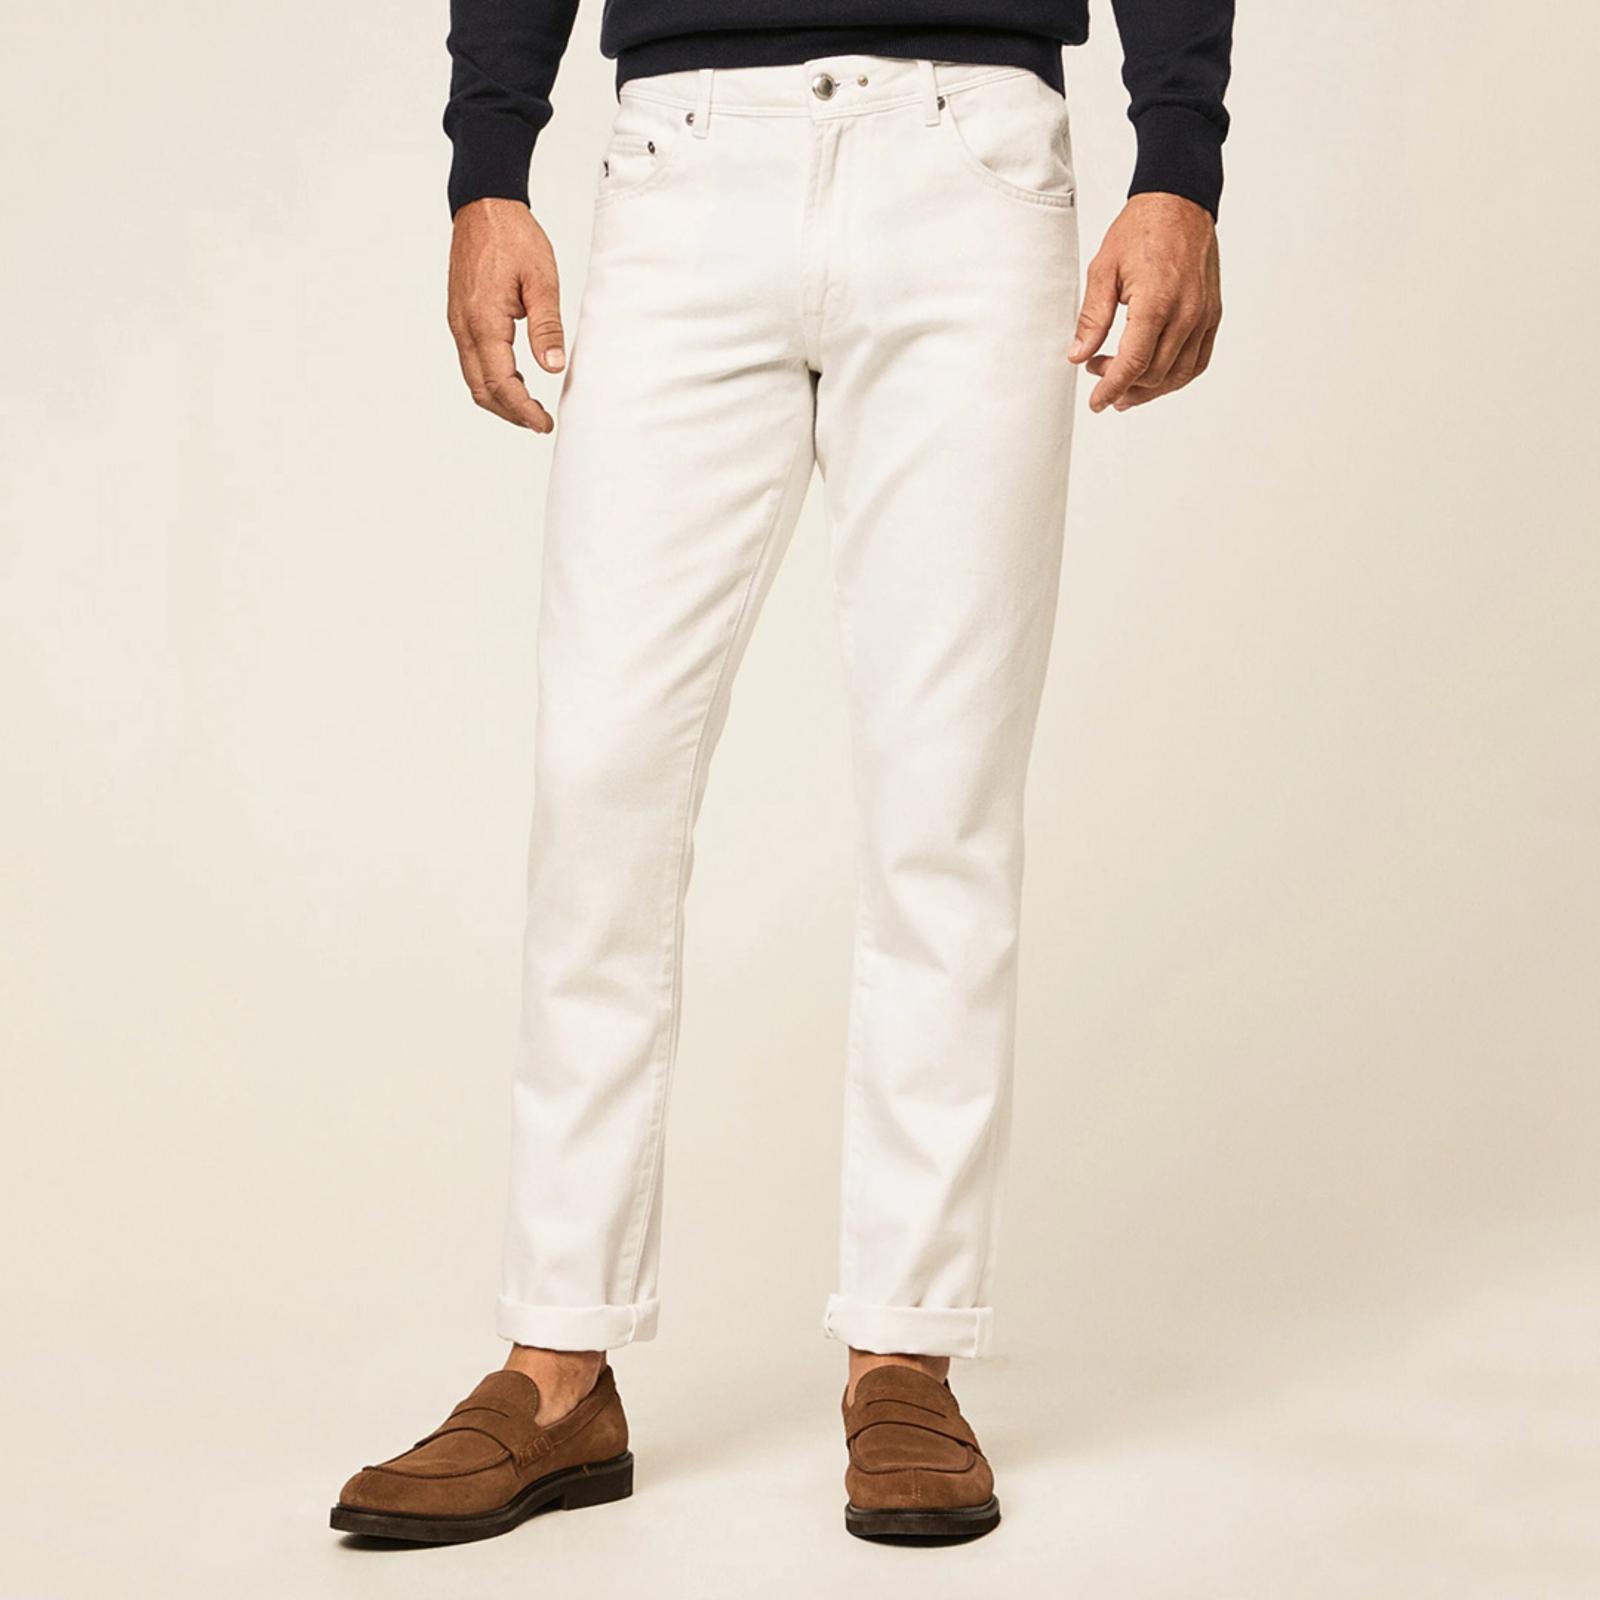 White Slim Fit Stretch Jeans - BrandAlley